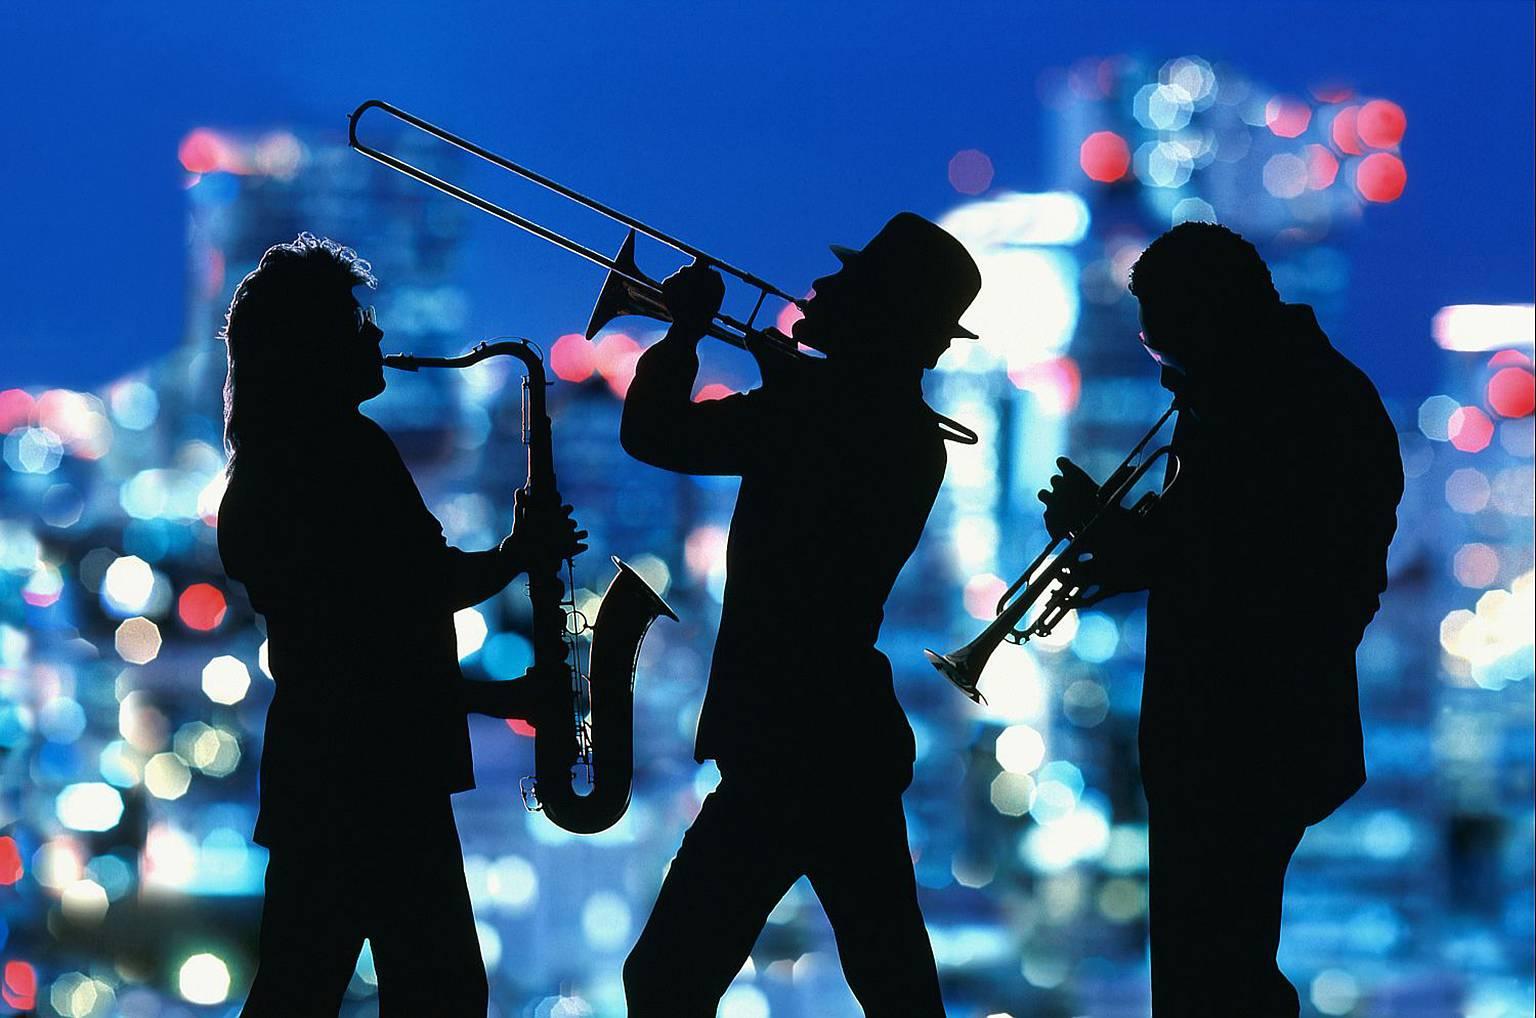 Mitchell Funk Figurative Photograph - Jazz Musicians:  Night Blue City Lights